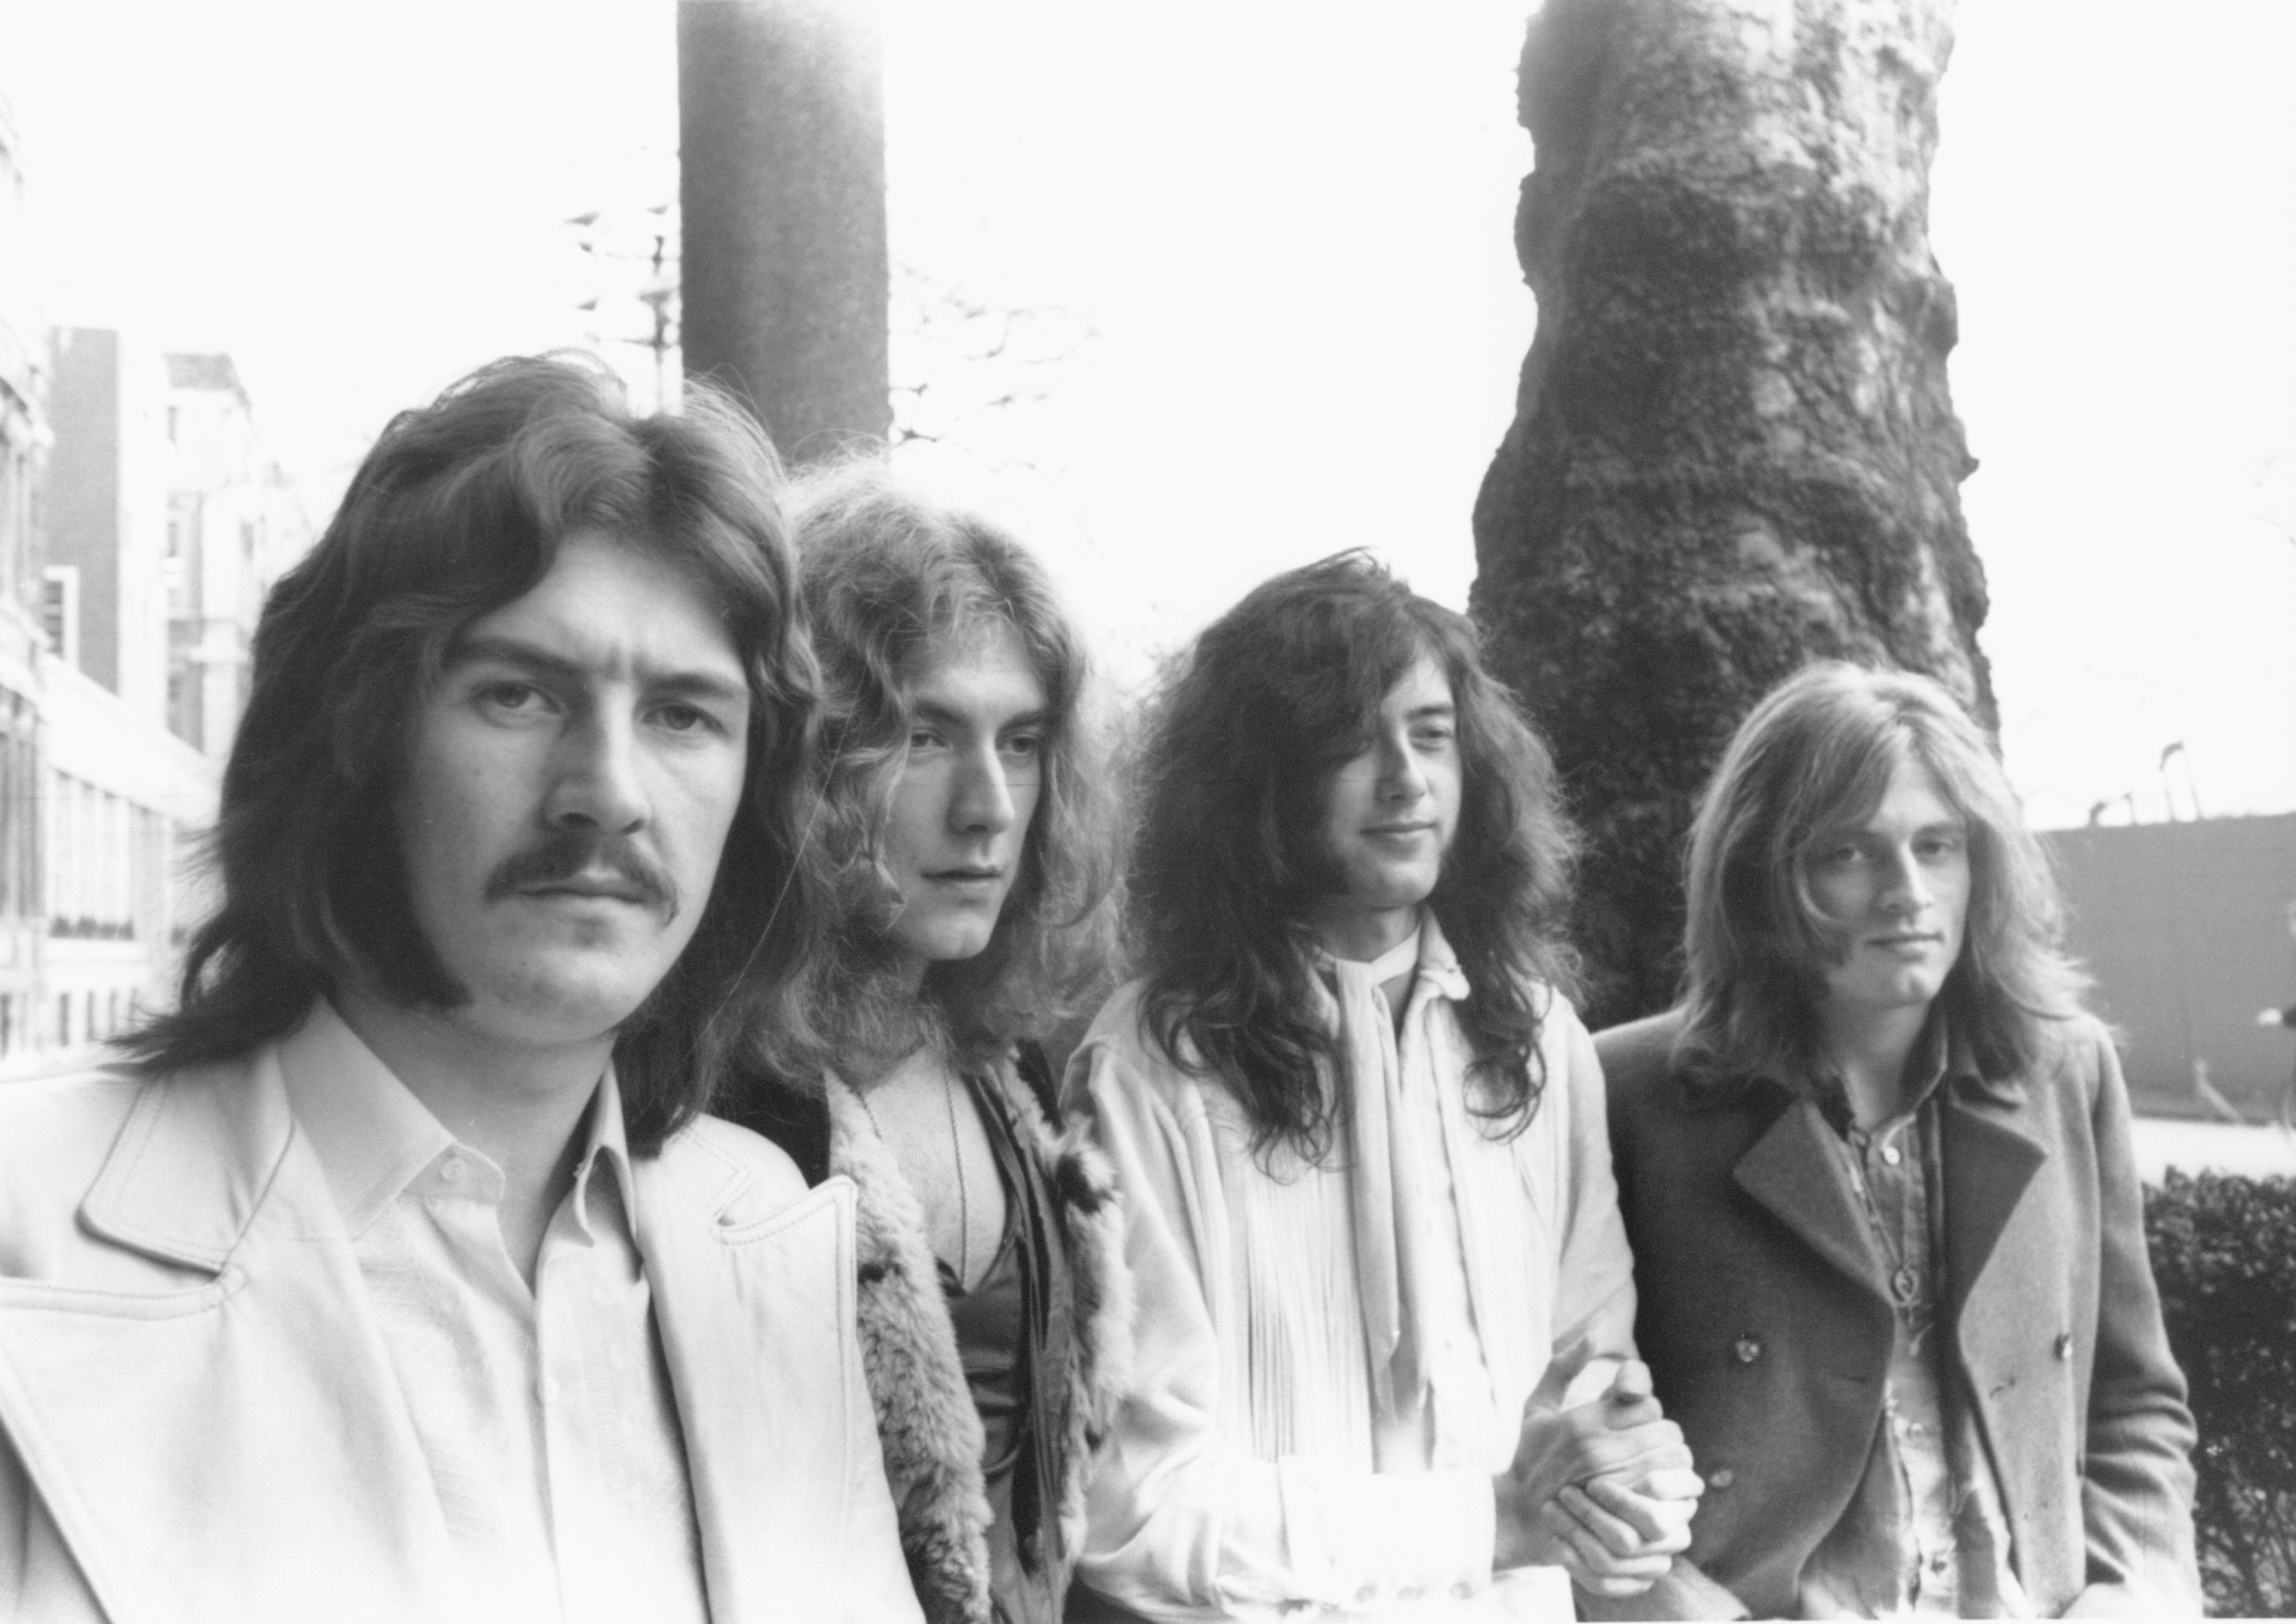 John Bonham, Robert Plant, Jimmy Page and John Paul Jones of Led Zeppelin